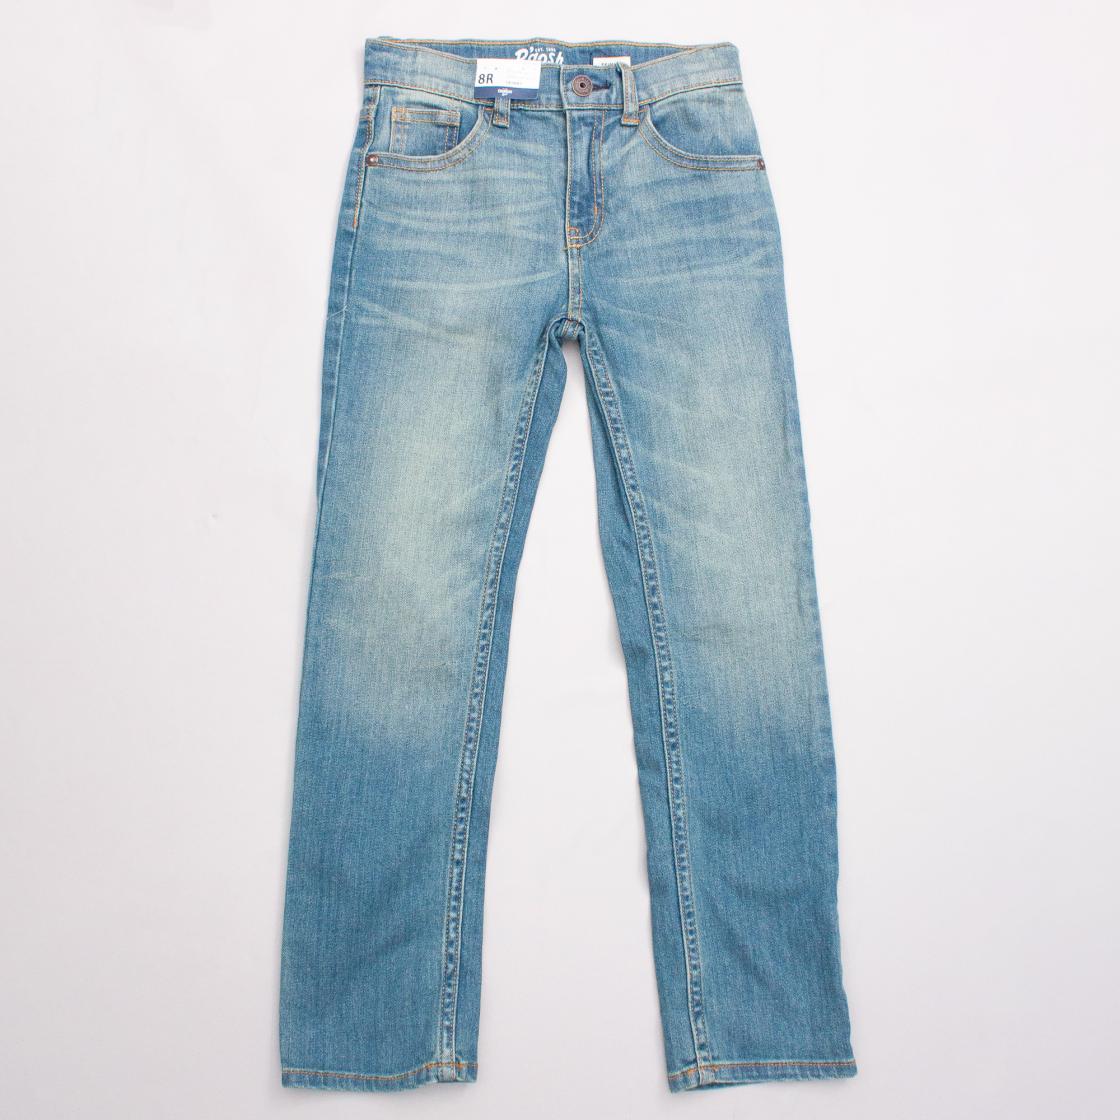 OshKosh Distressed Skinny Jeans "Brand New"